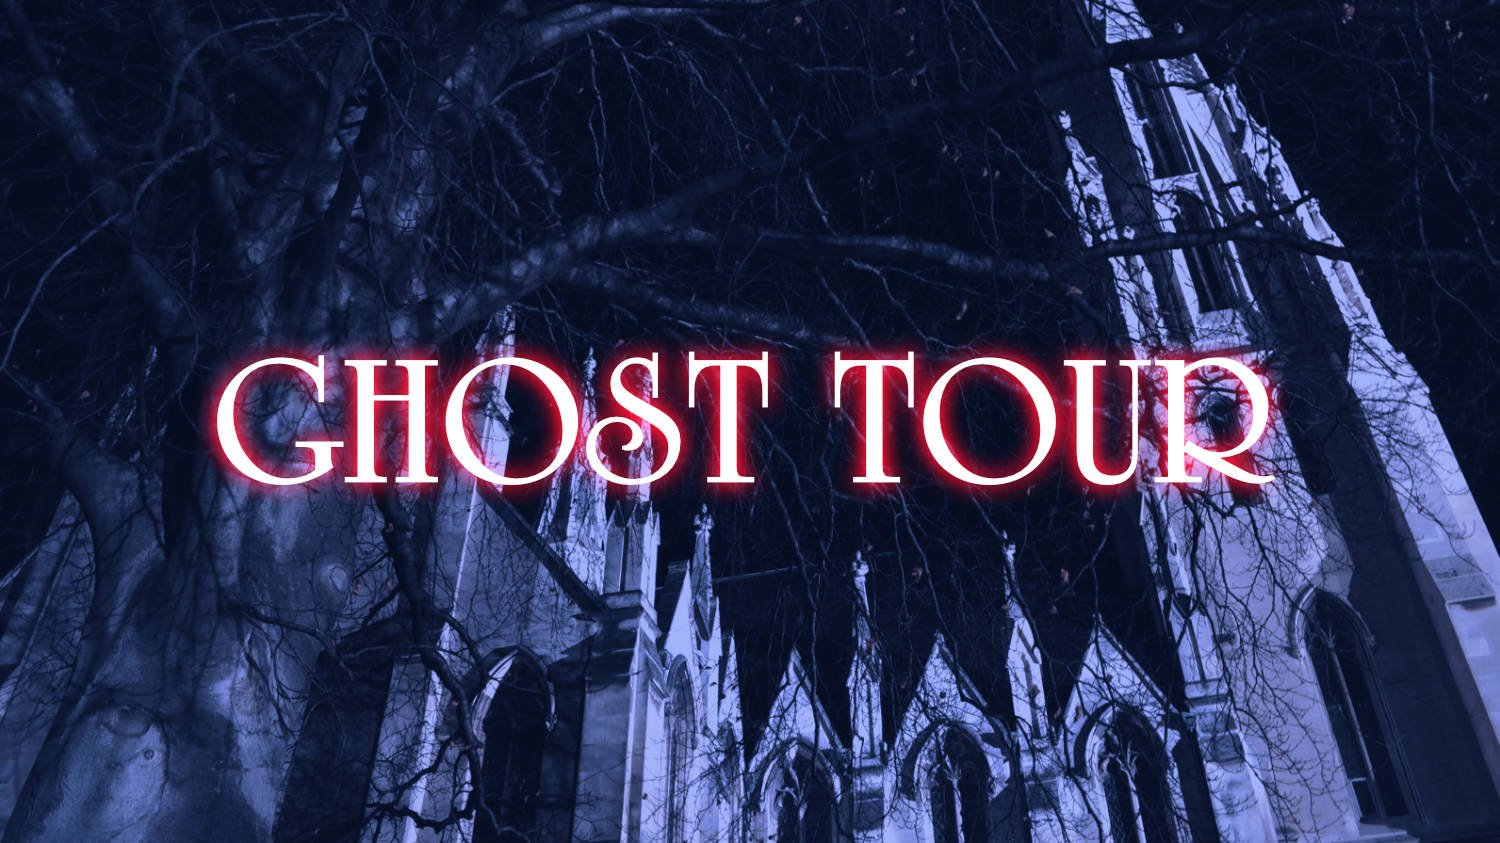 The-Dunedin-Ghost-Tour-Gallery.jpg